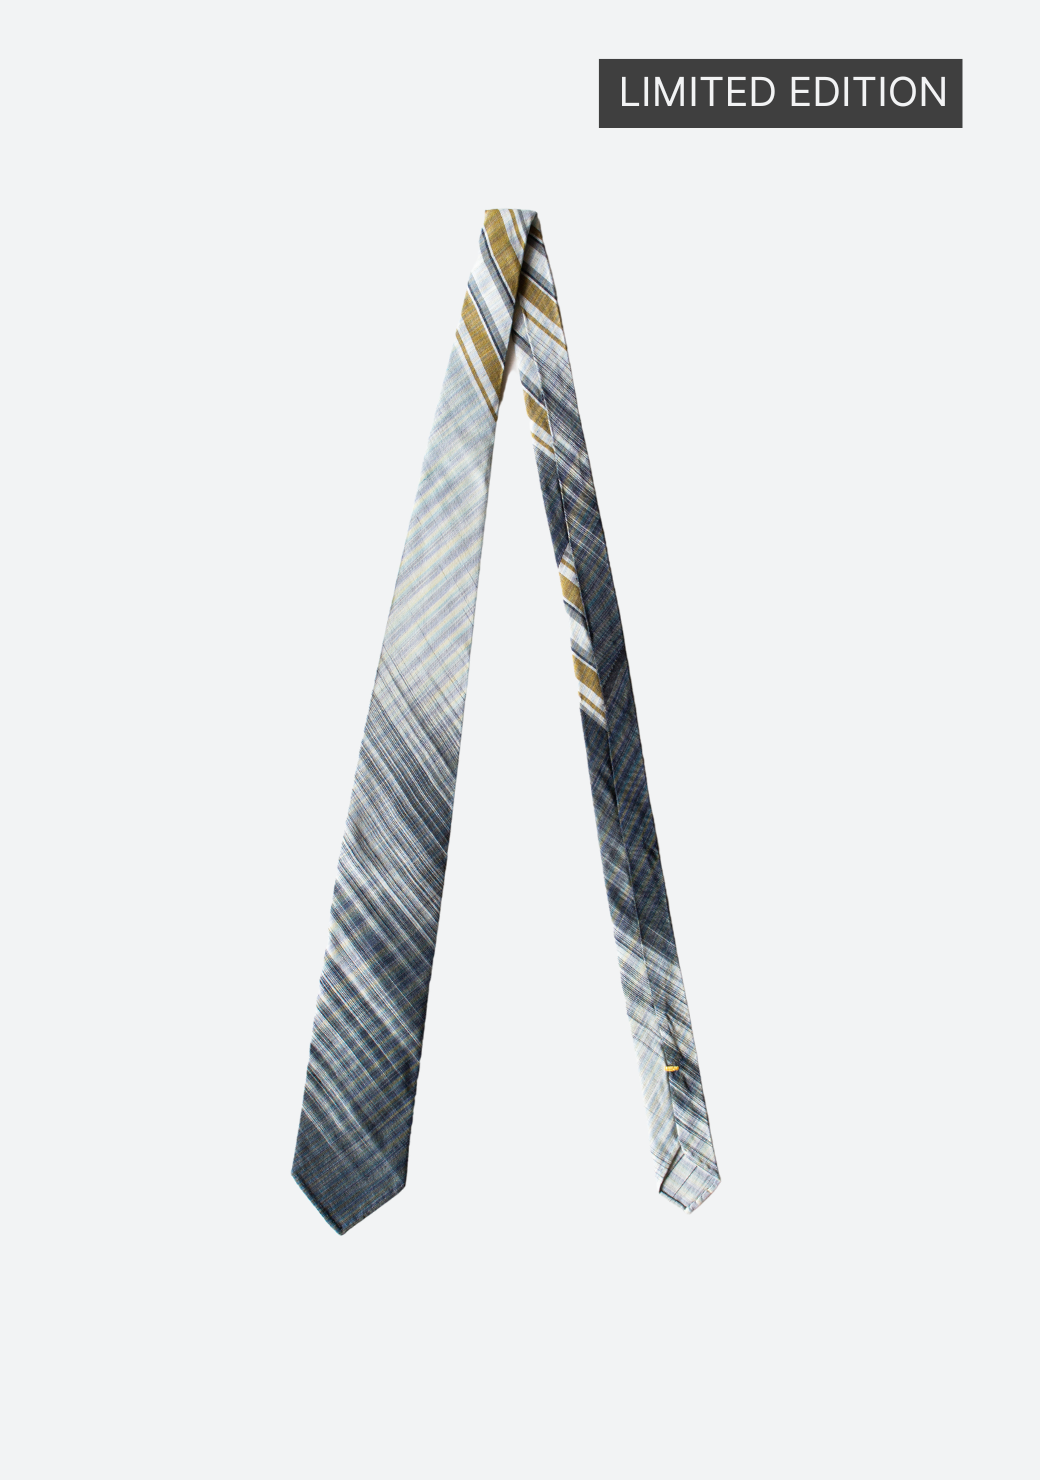 Tenun Silk Tie in Mixed Grey